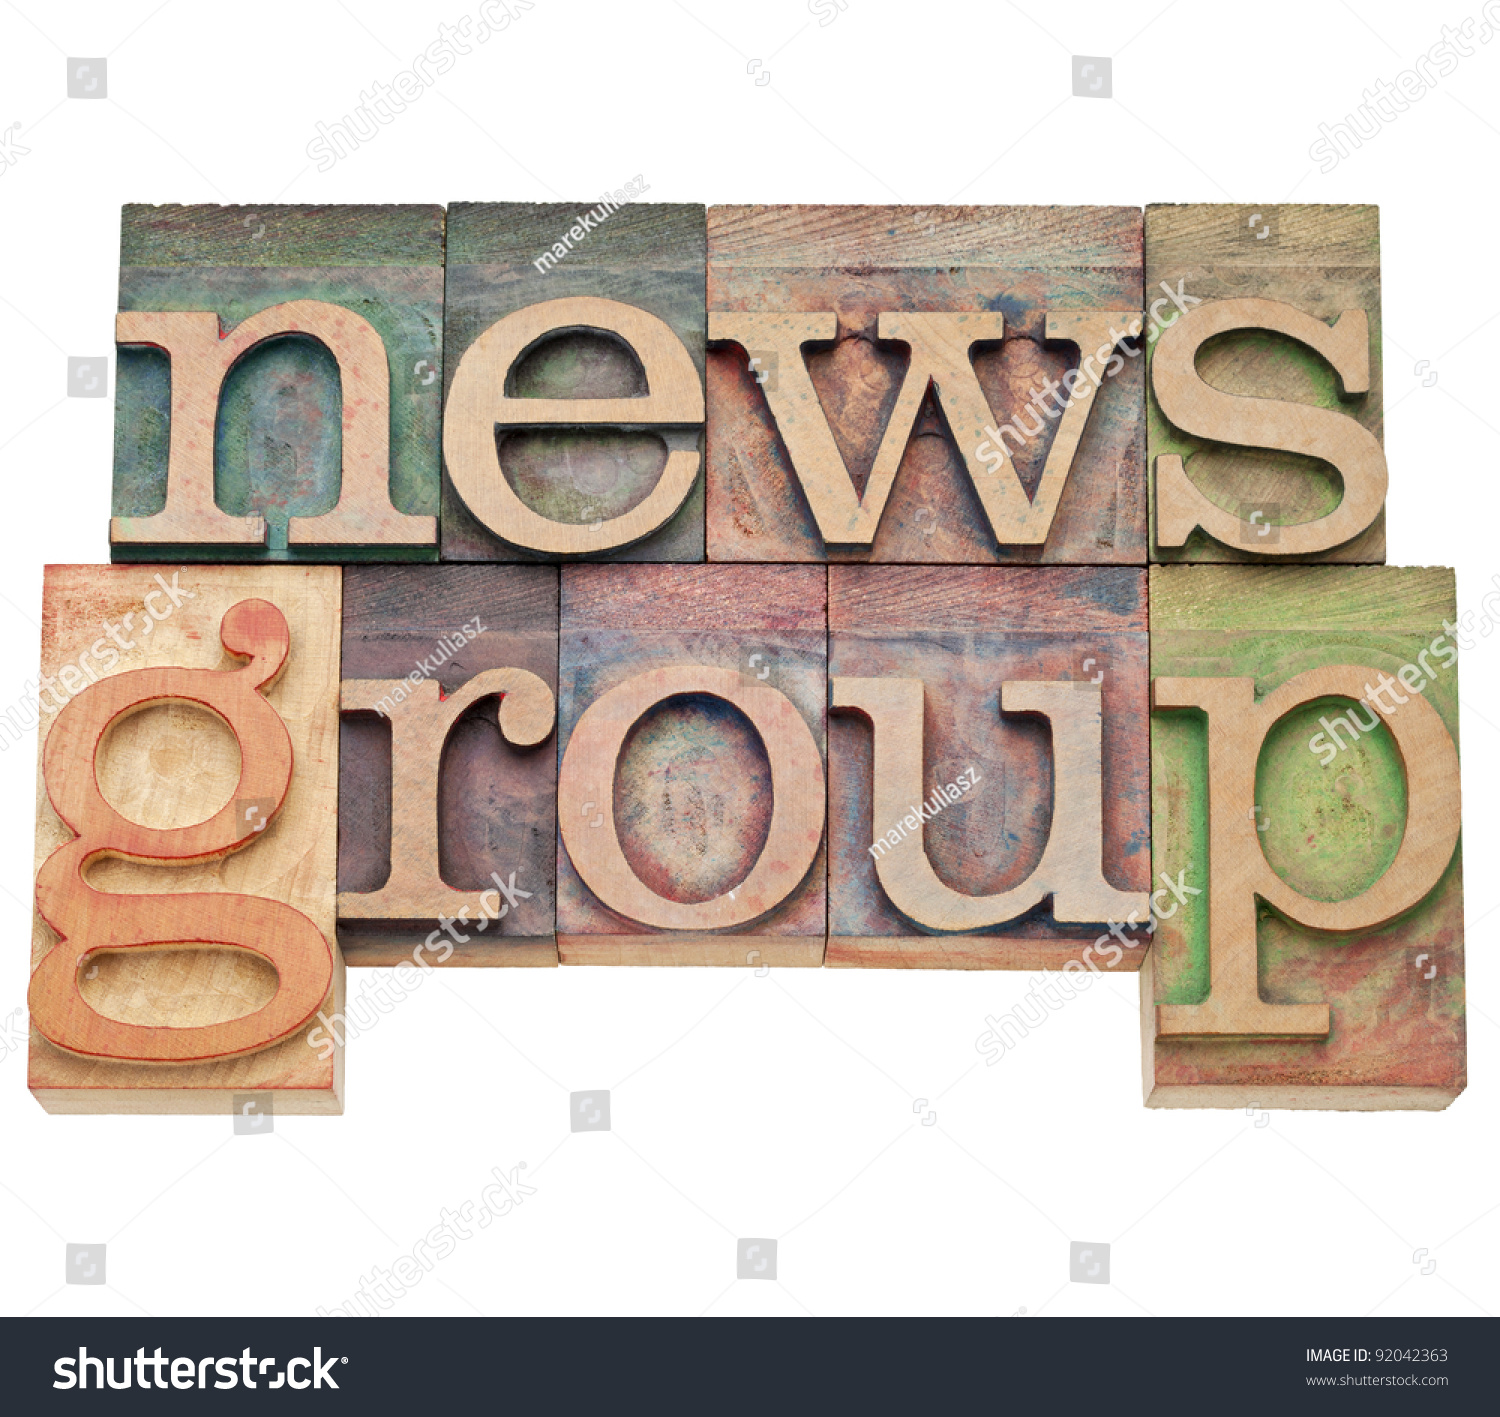 Internet News Group 91